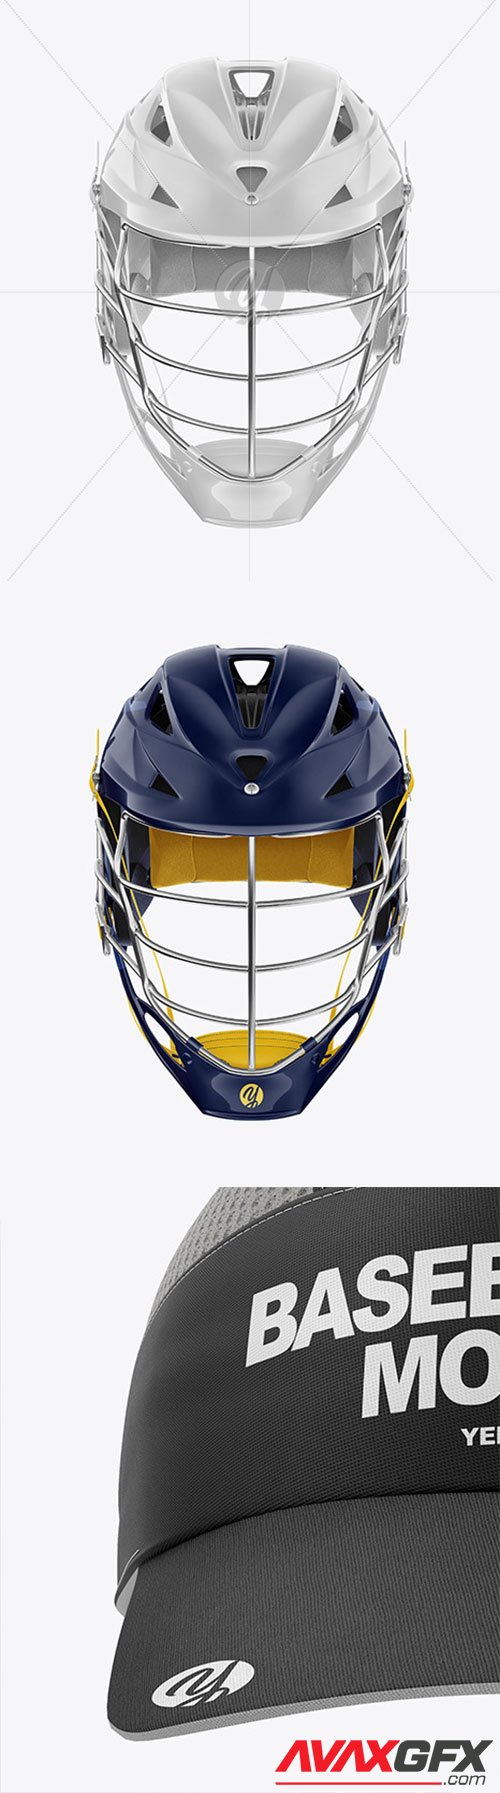 Lacrosse Helmet Mockup 61438